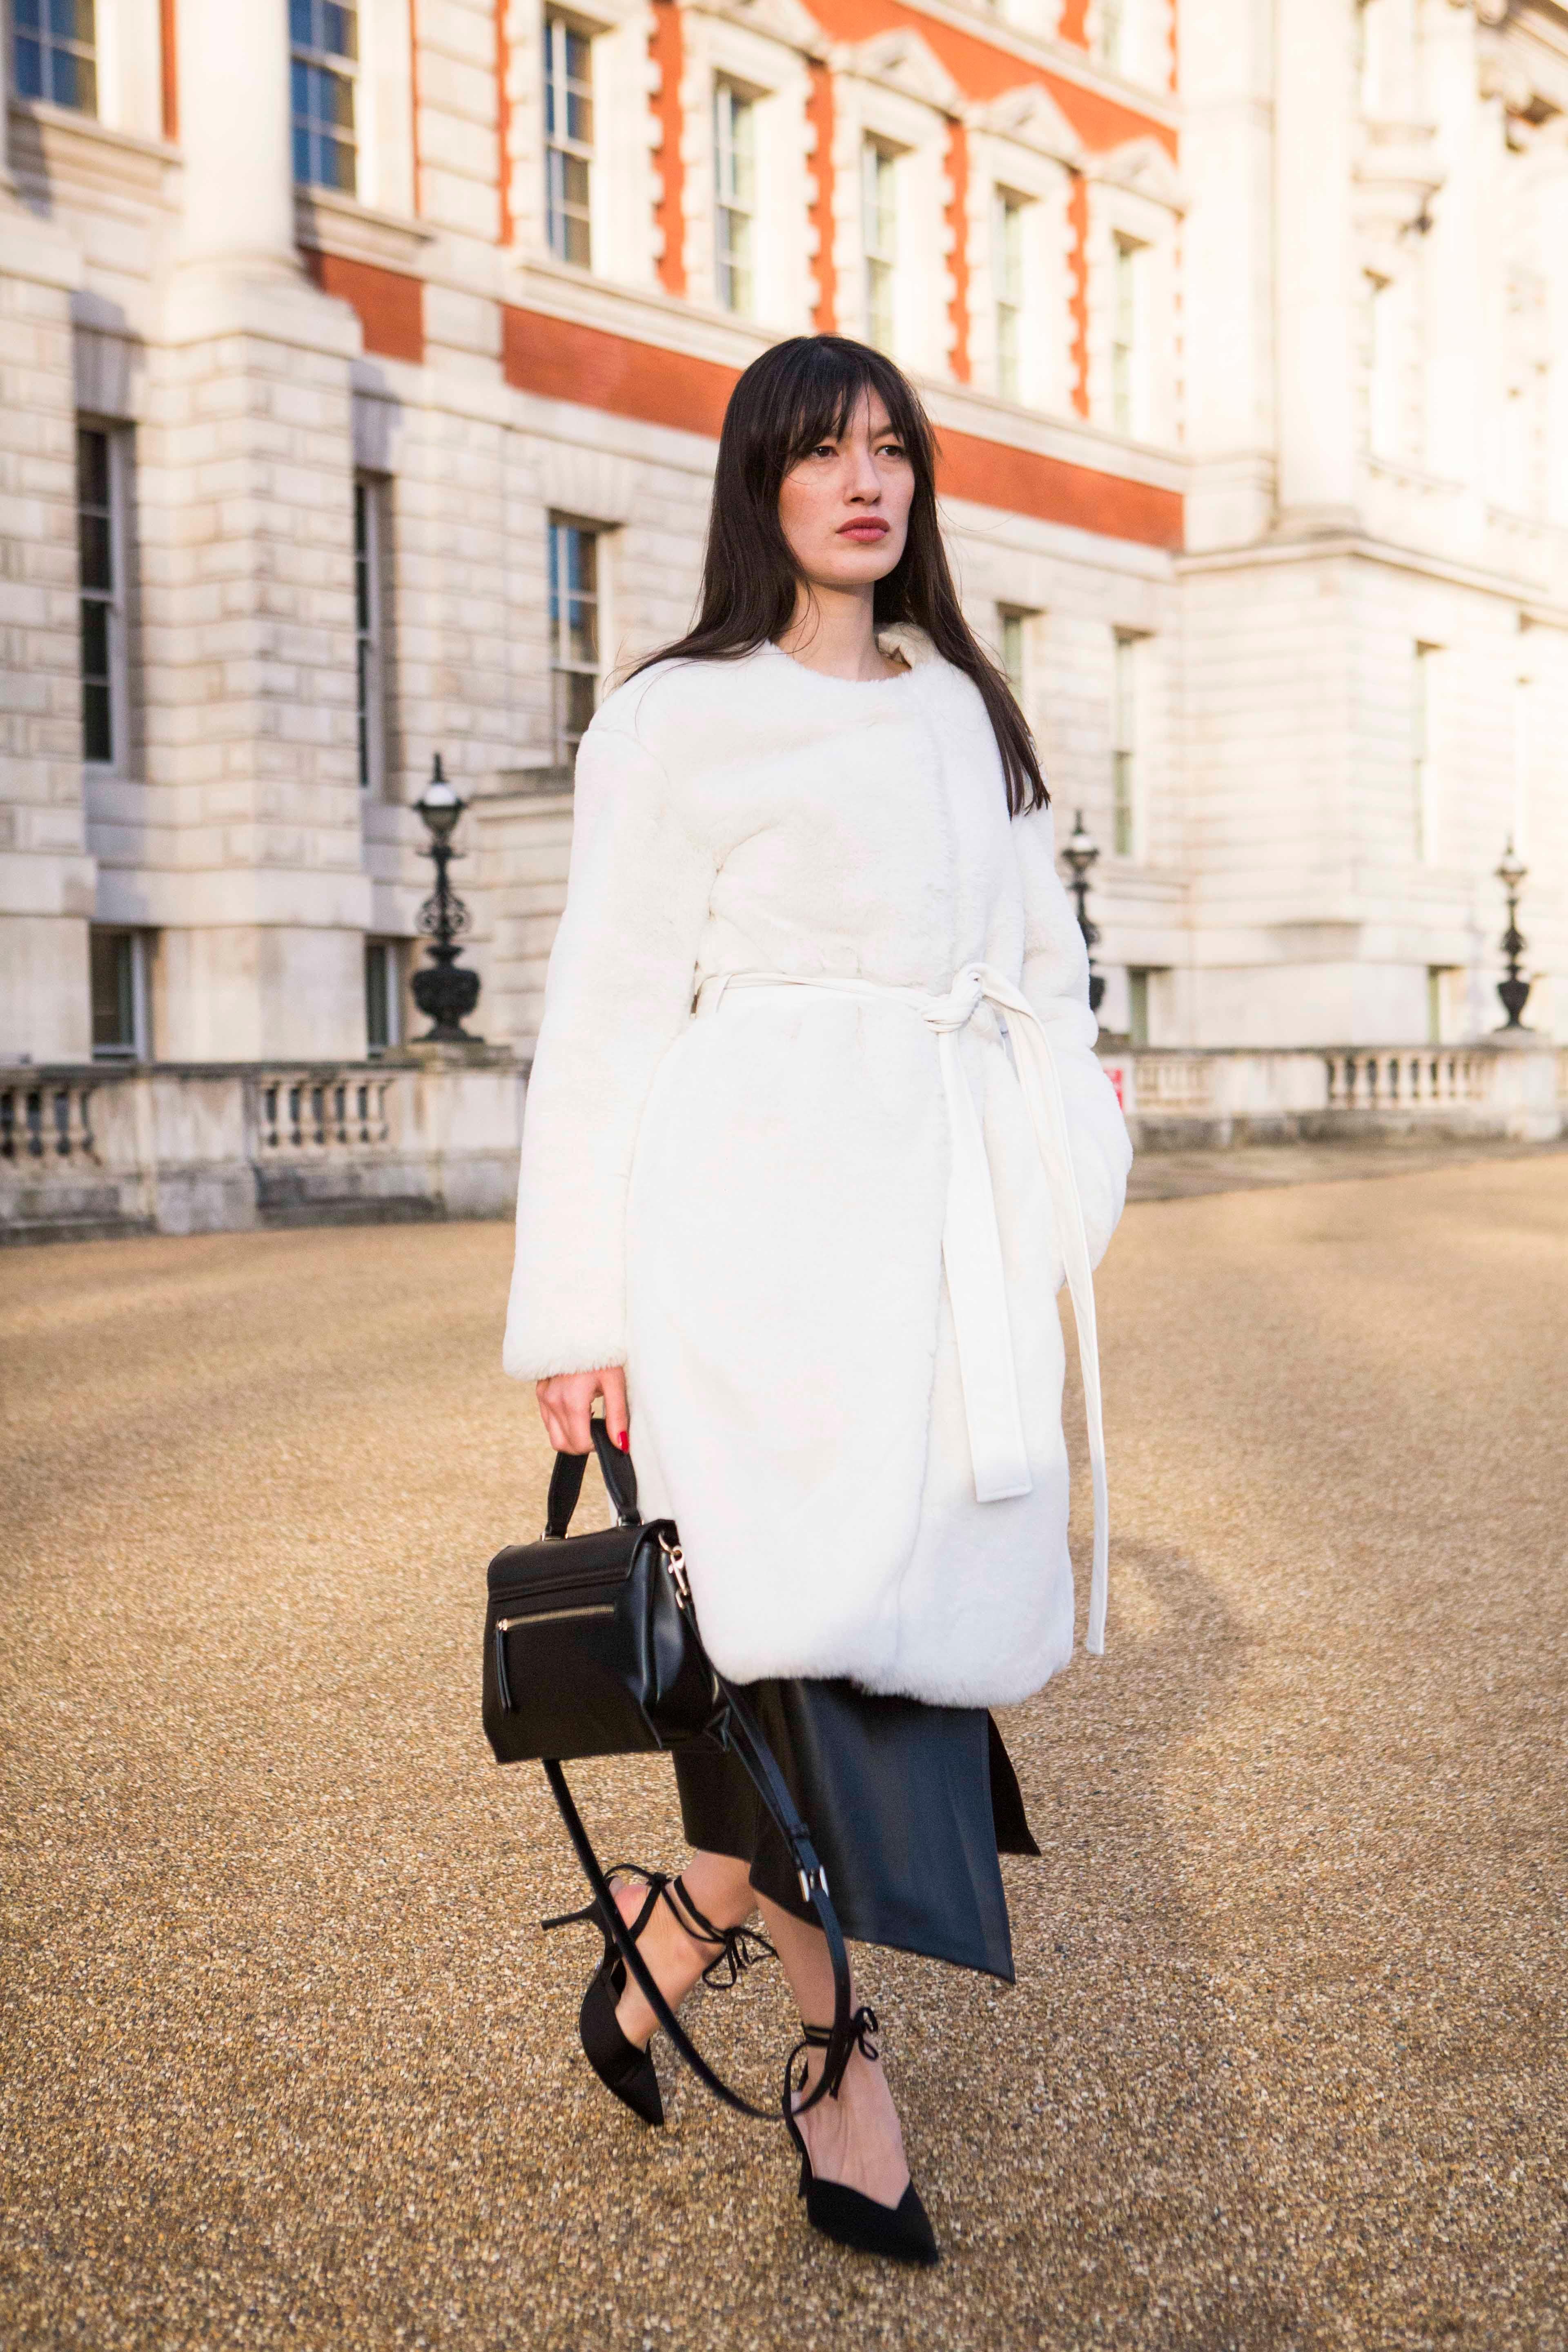 Verheyen London Serena  Collarless Faux Fur Coat in White - Size uk 8 For Sale 2